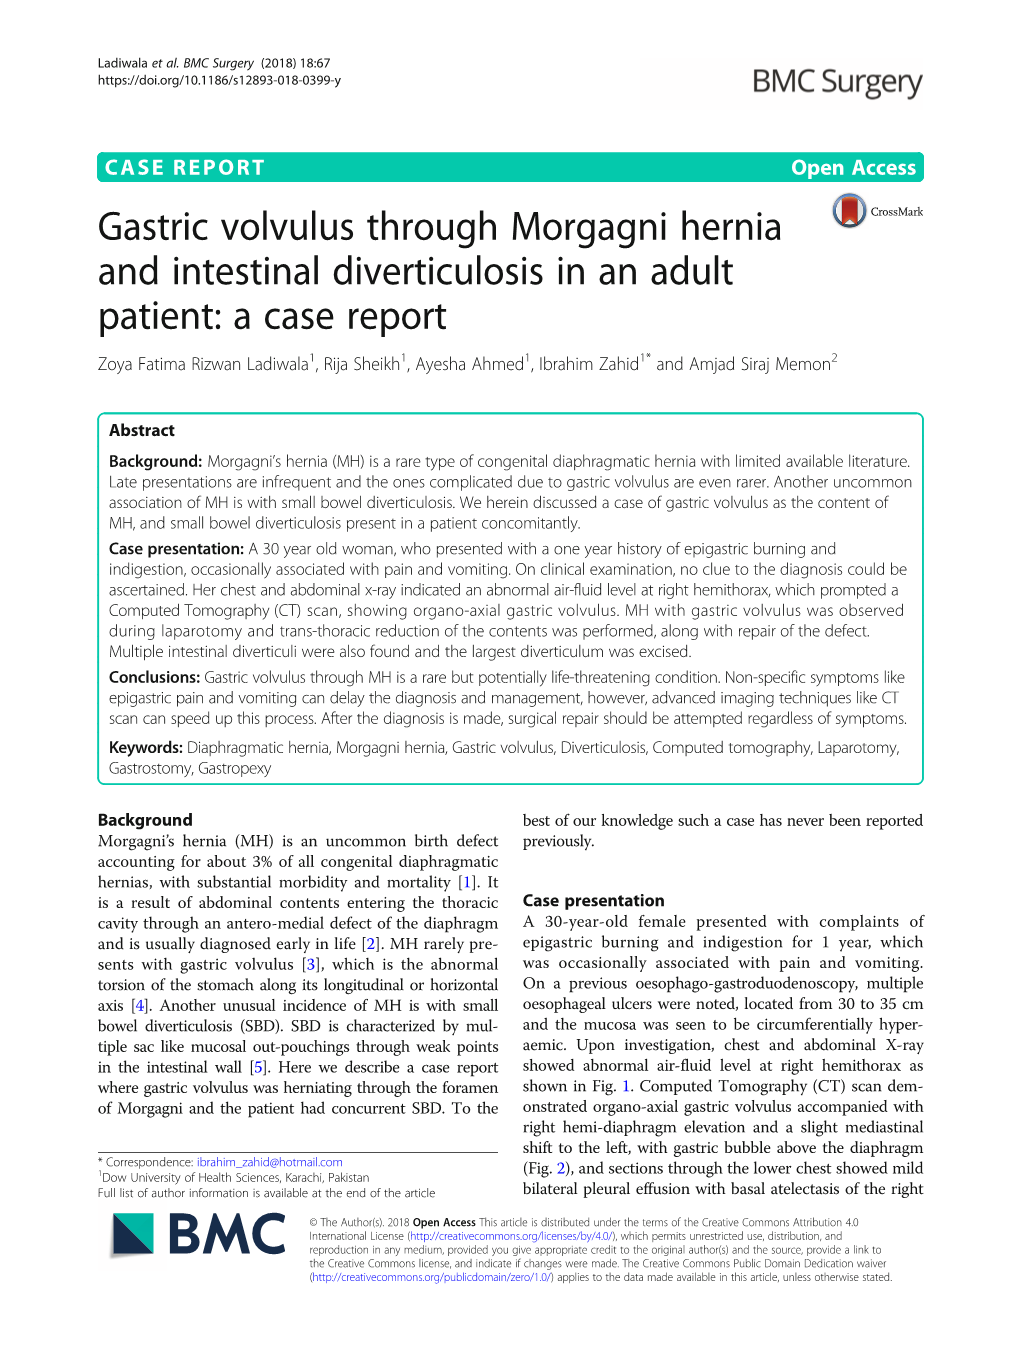 Gastric Volvulus Through Morgagni Hernia and Intestinal Diverticulosis